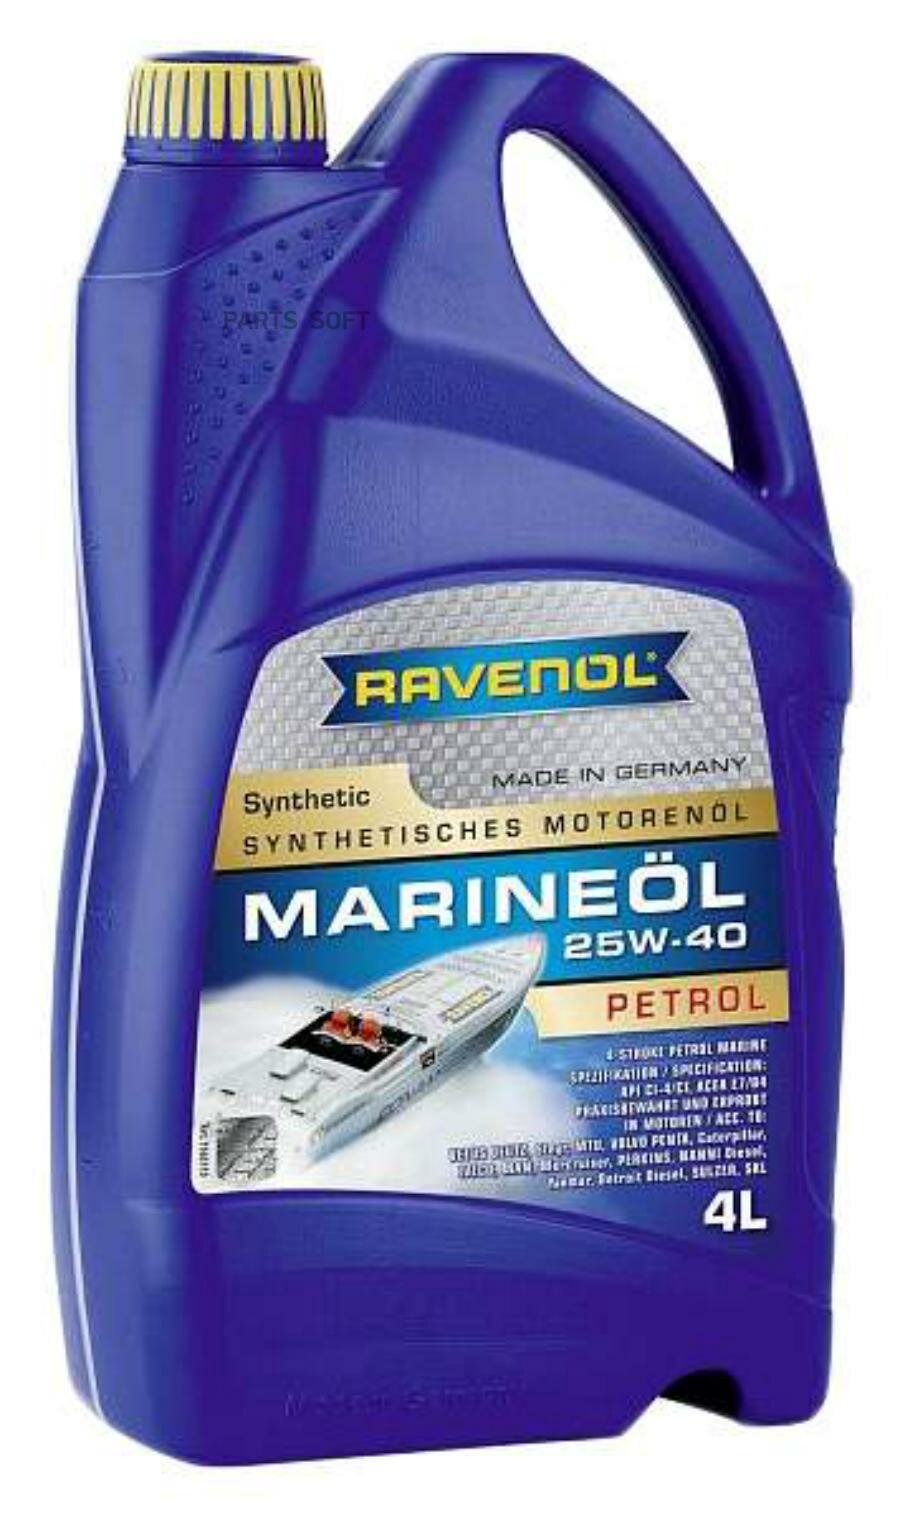 RAVENOL 1162115-004-01-999 Моторное масло RAVENOL Marineoil PETROL SAE 25W-40 synthetic (4л) new